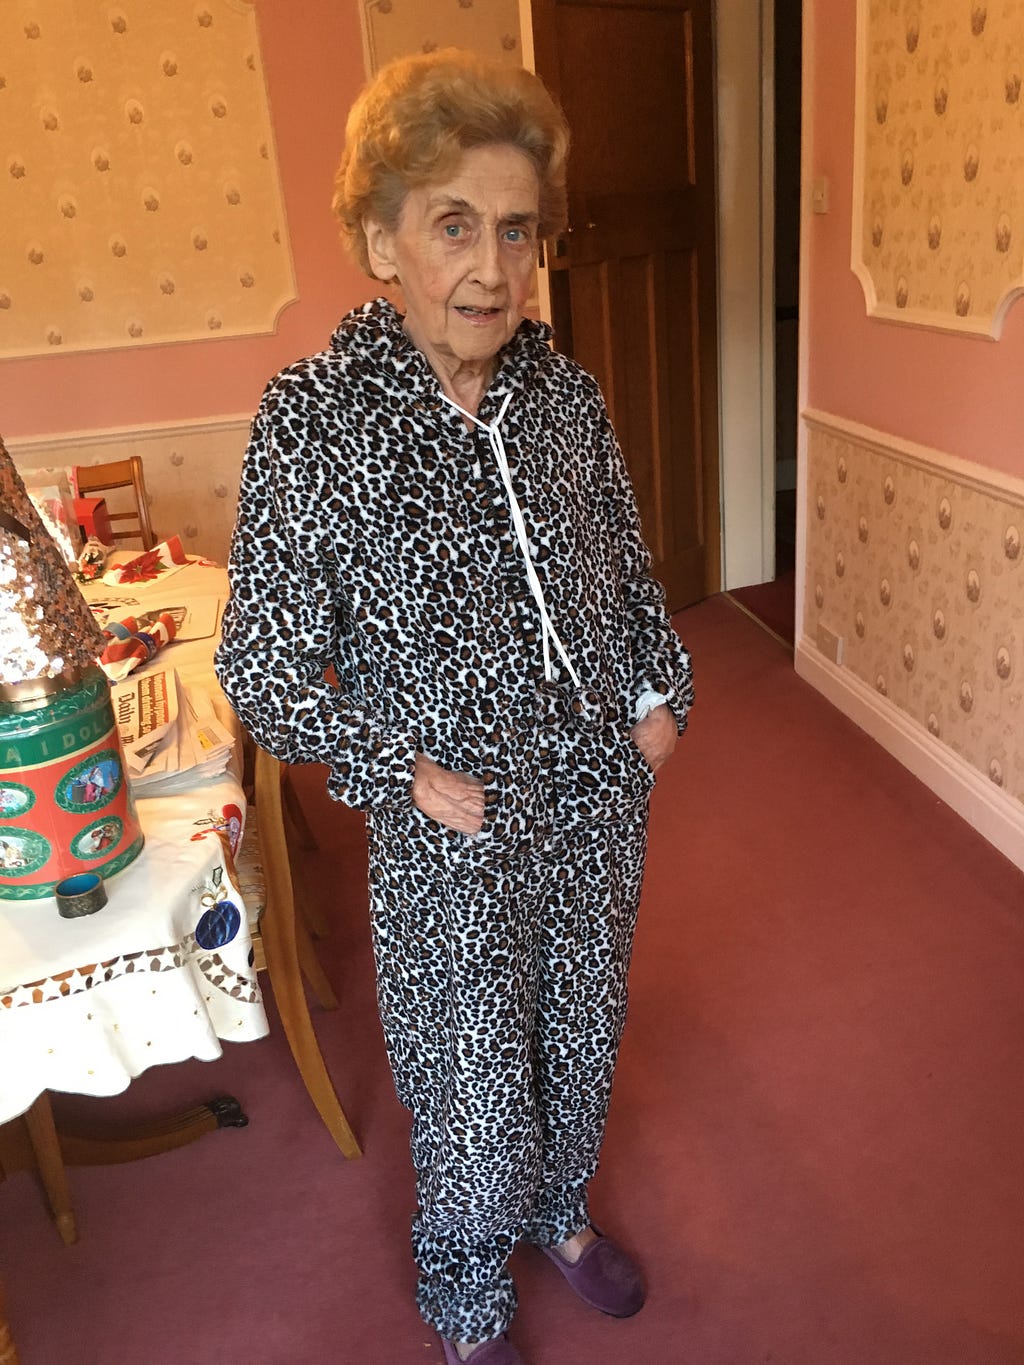 A photograph of my nan Eileen wearing an iconic leopard print onesie.